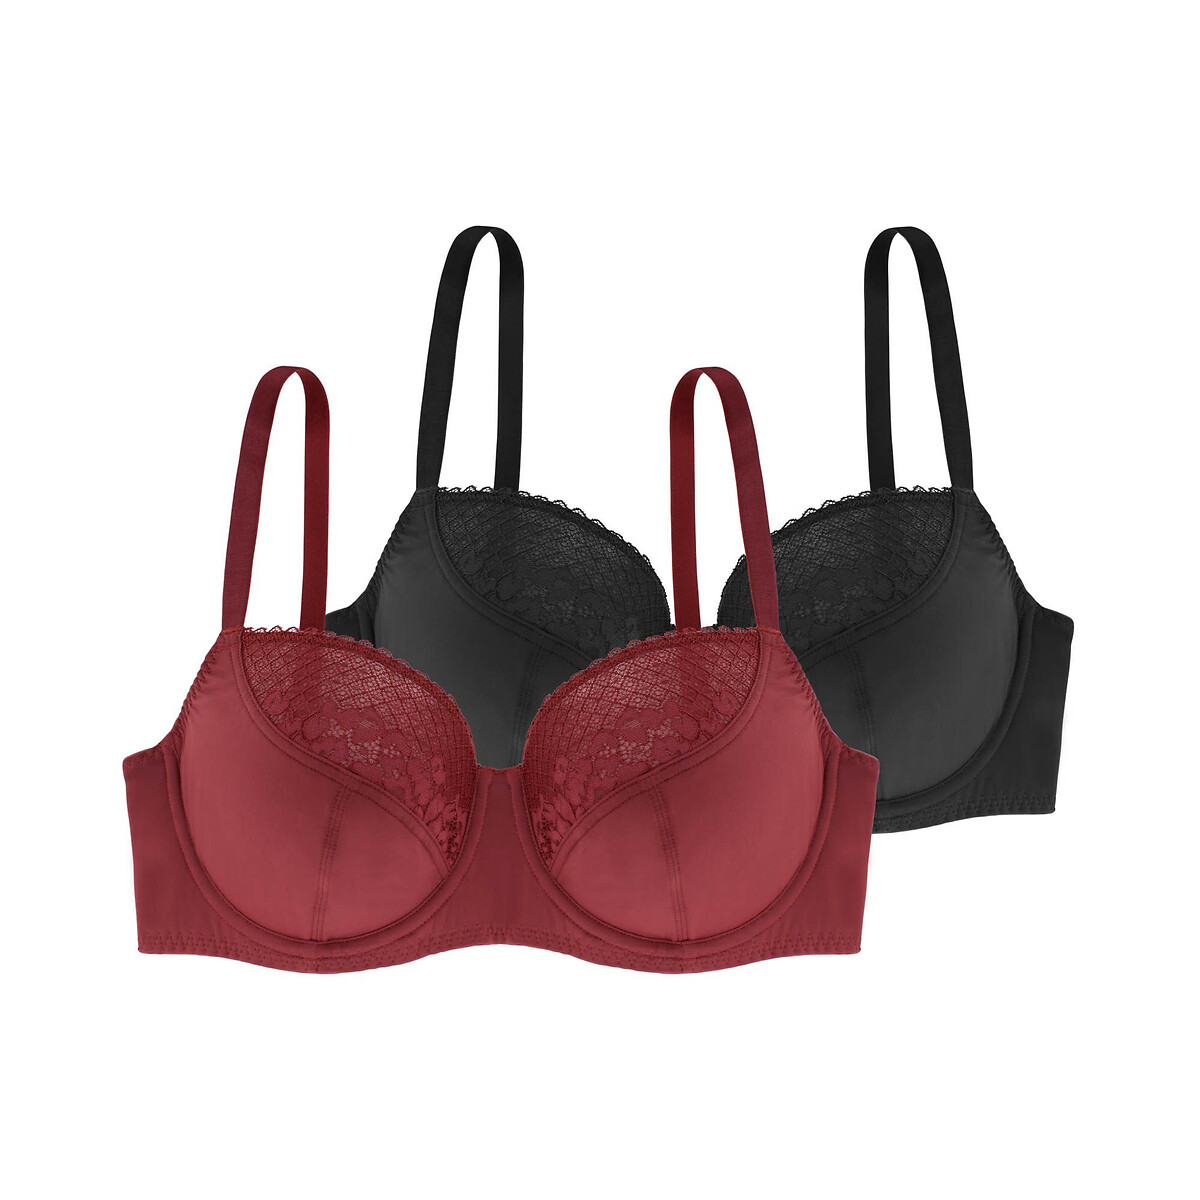 Pack of 2 kelsea recycled push-up bras red/black Dorina